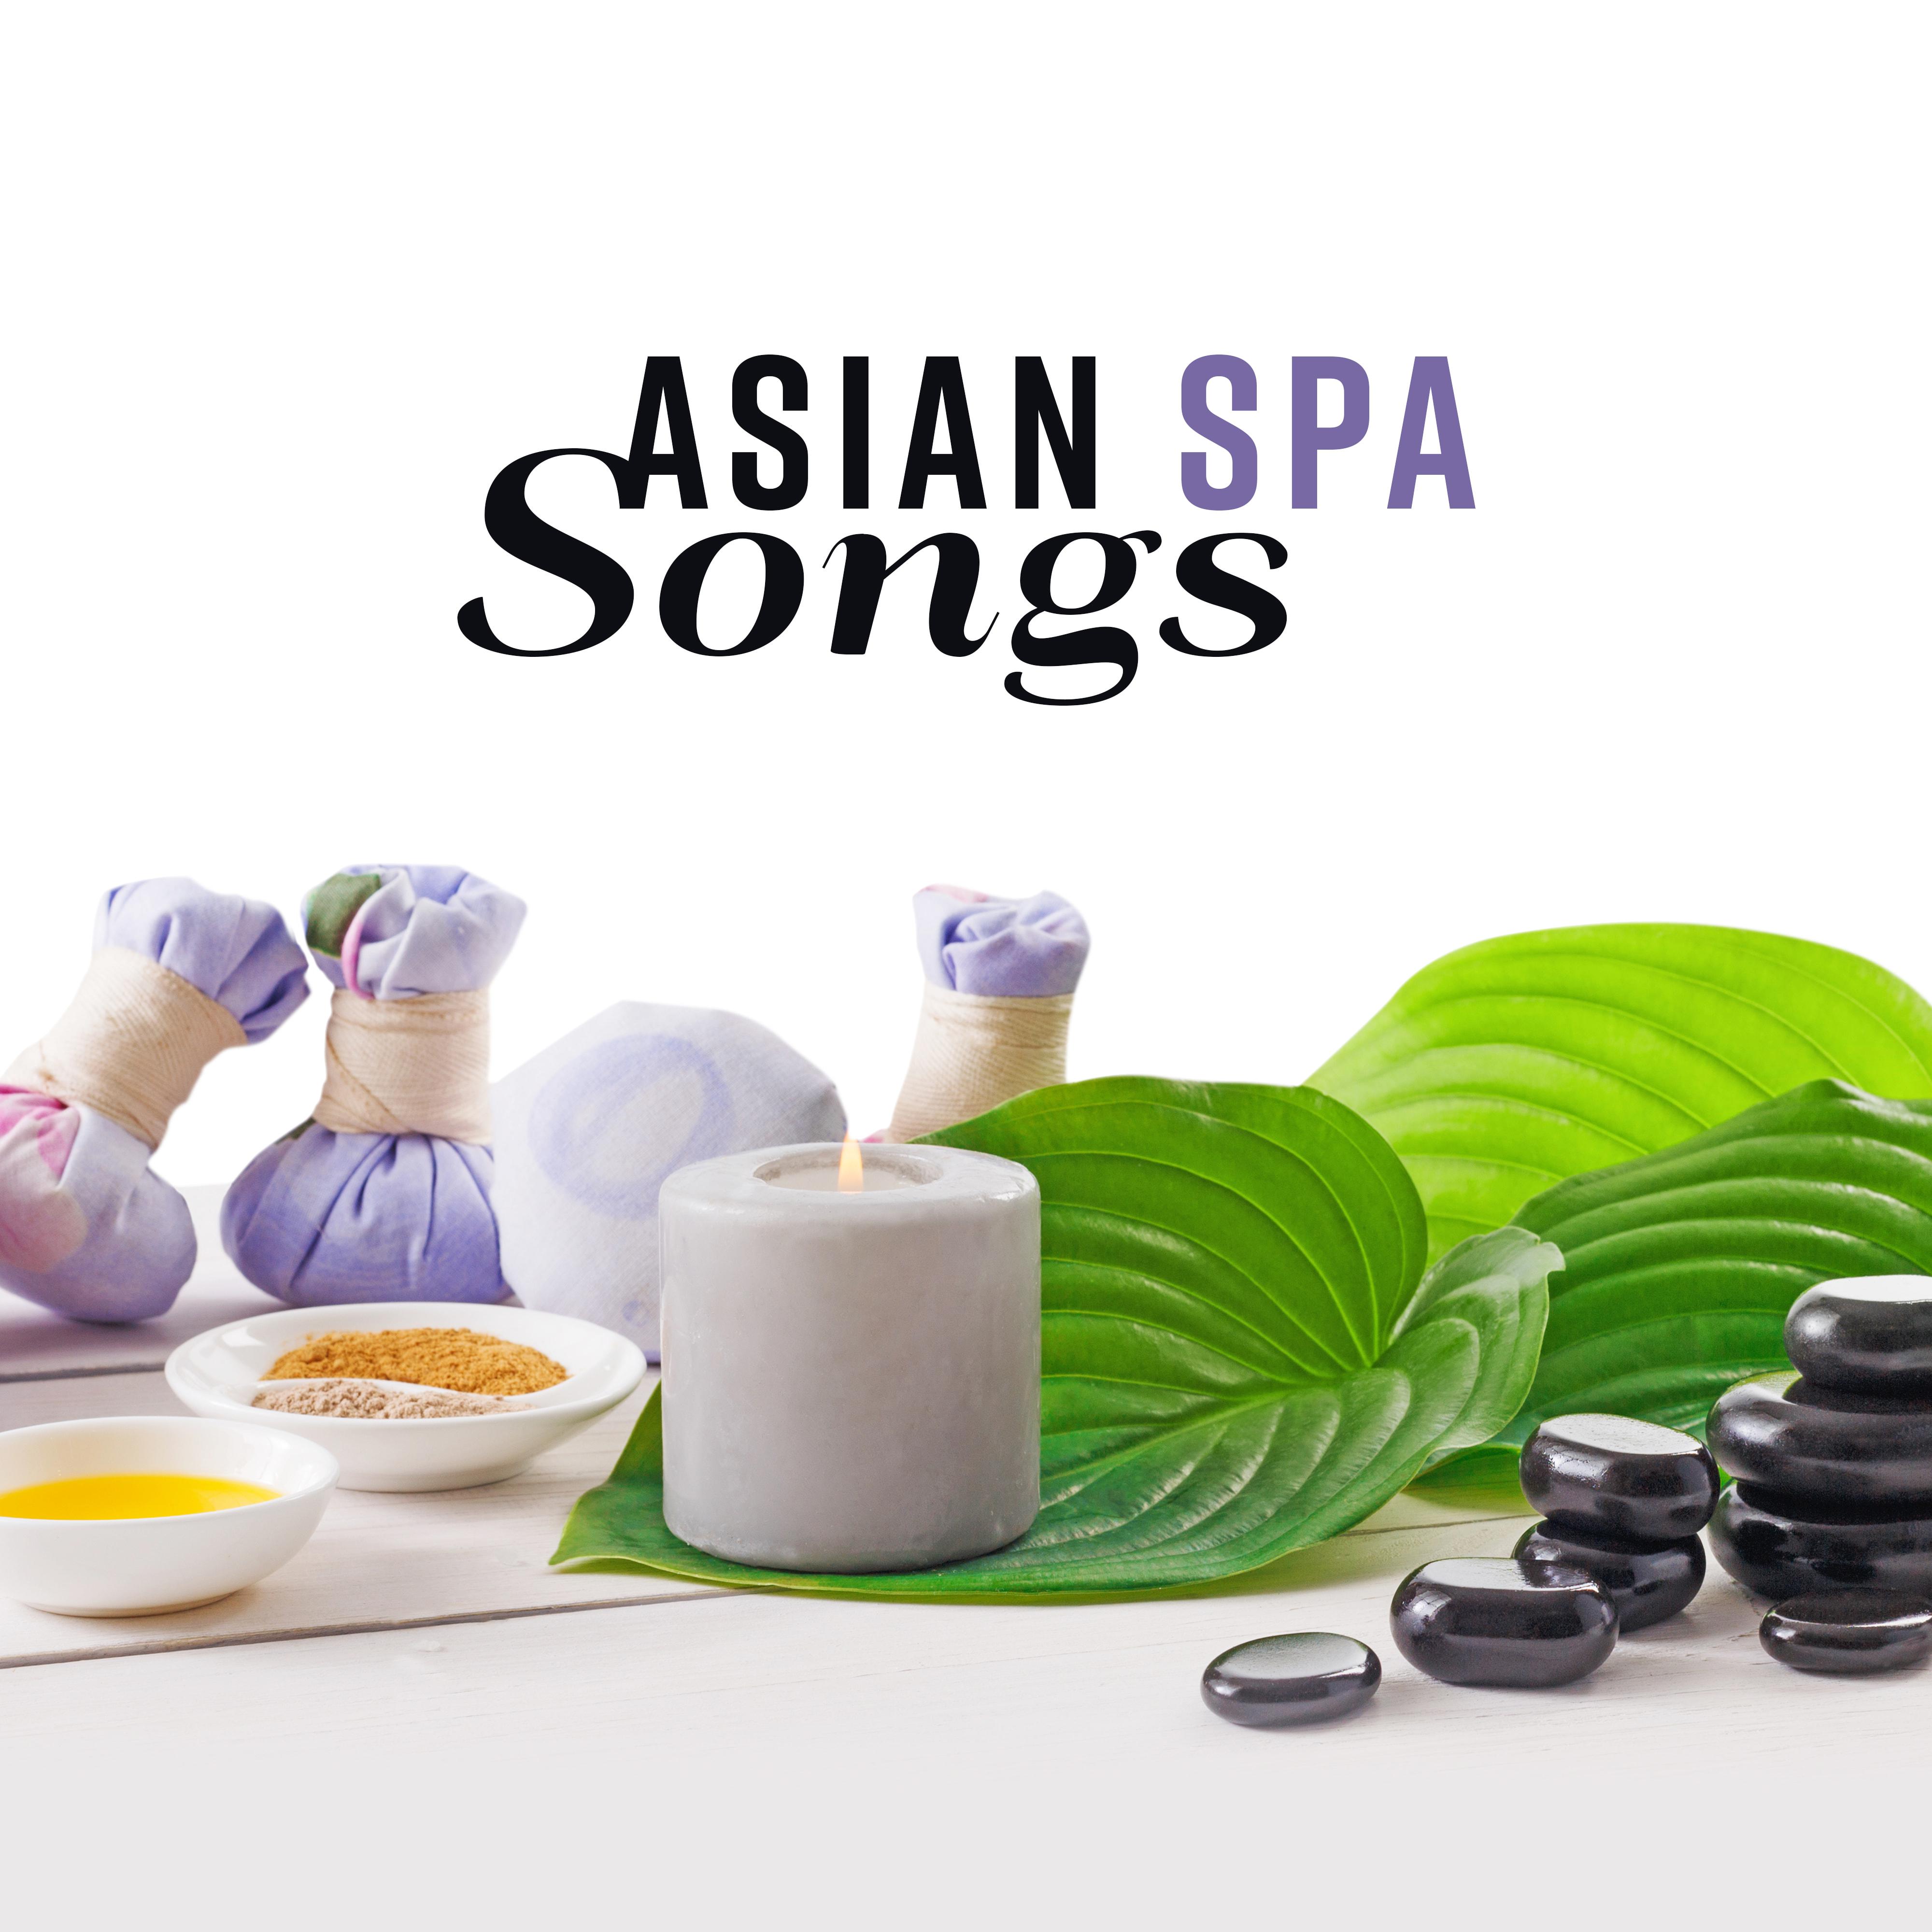 Asian Spa Songs